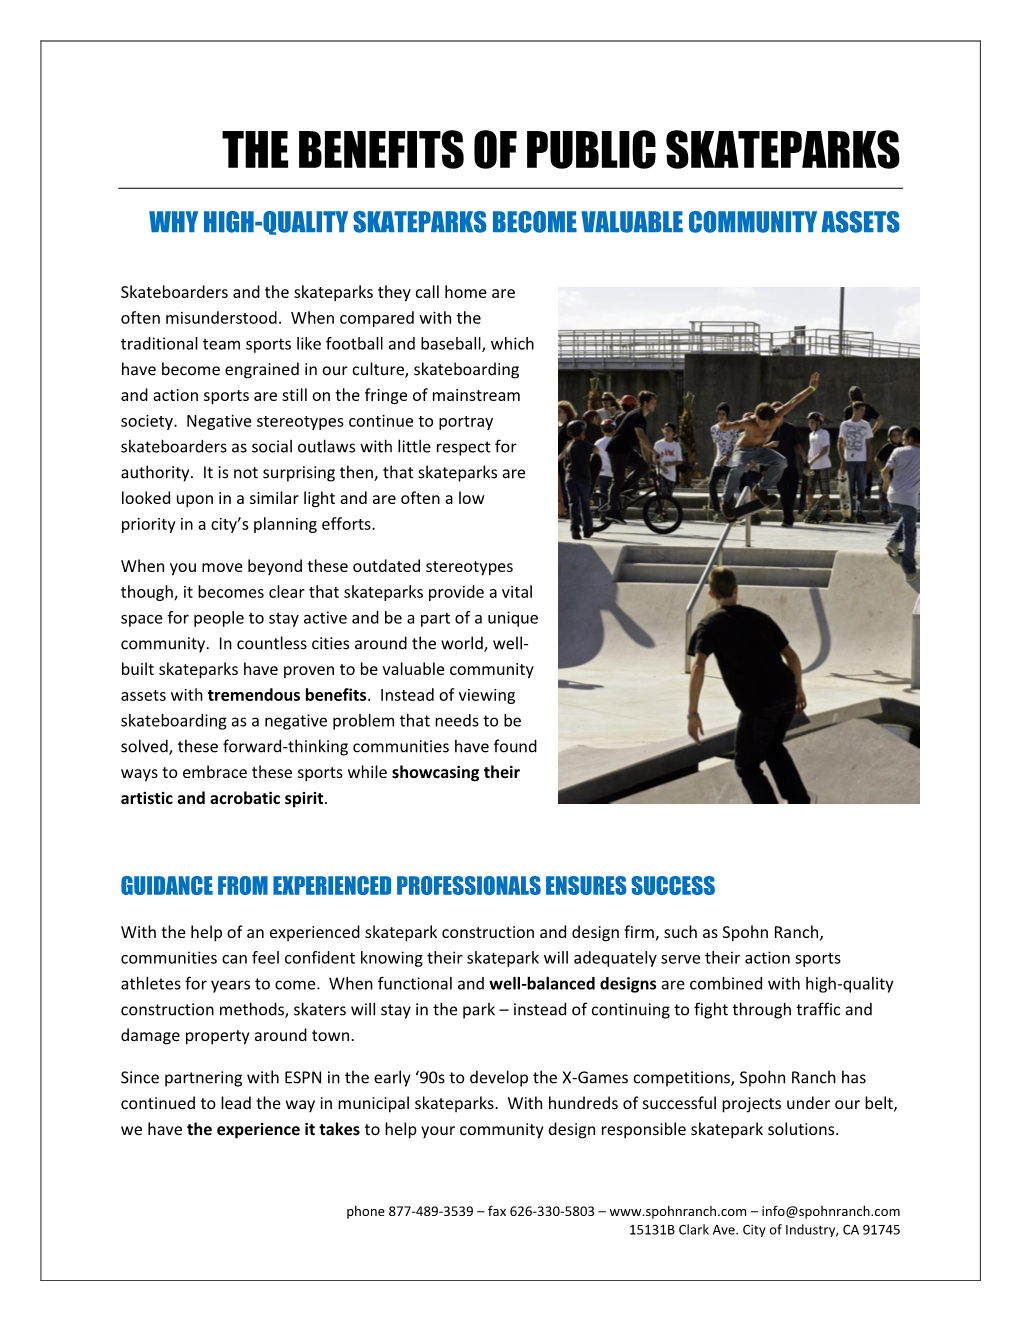 The Benefits of Public Skateparks